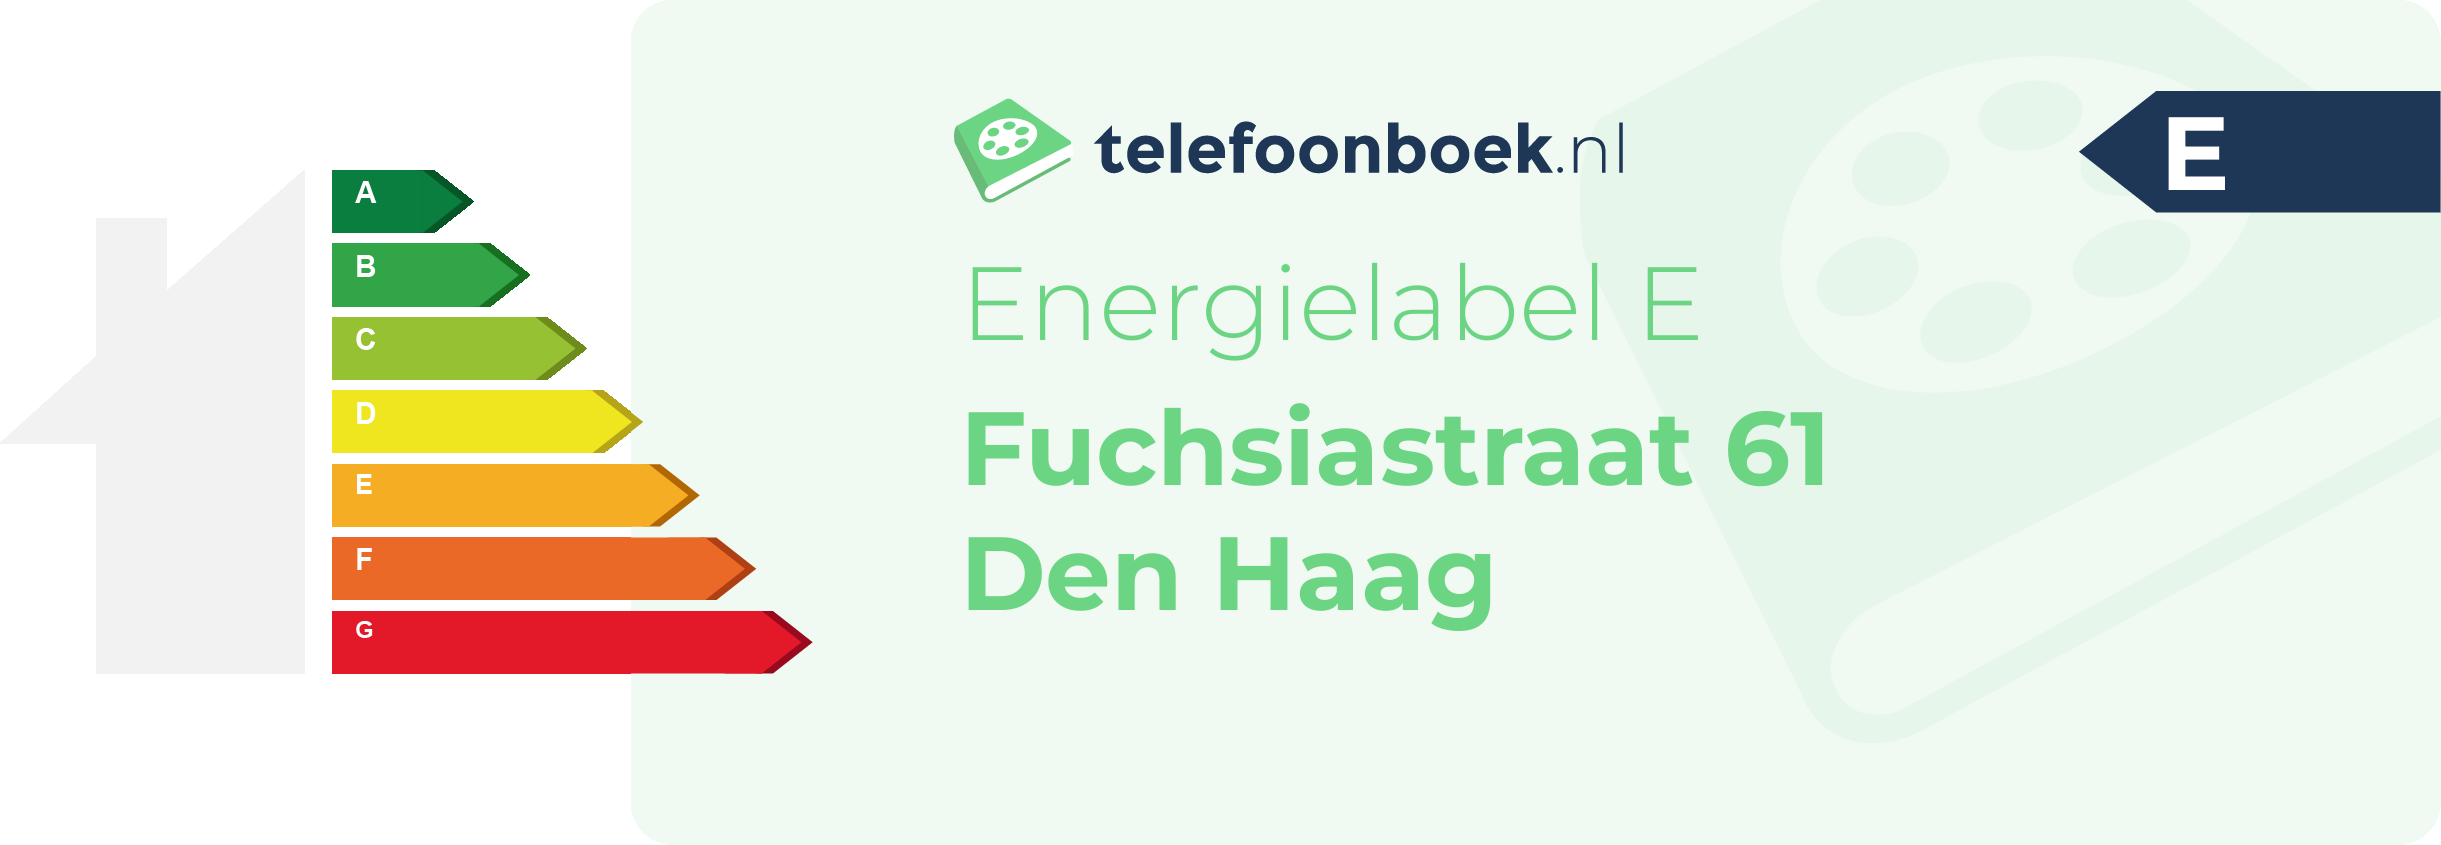 Energielabel Fuchsiastraat 61 Den Haag